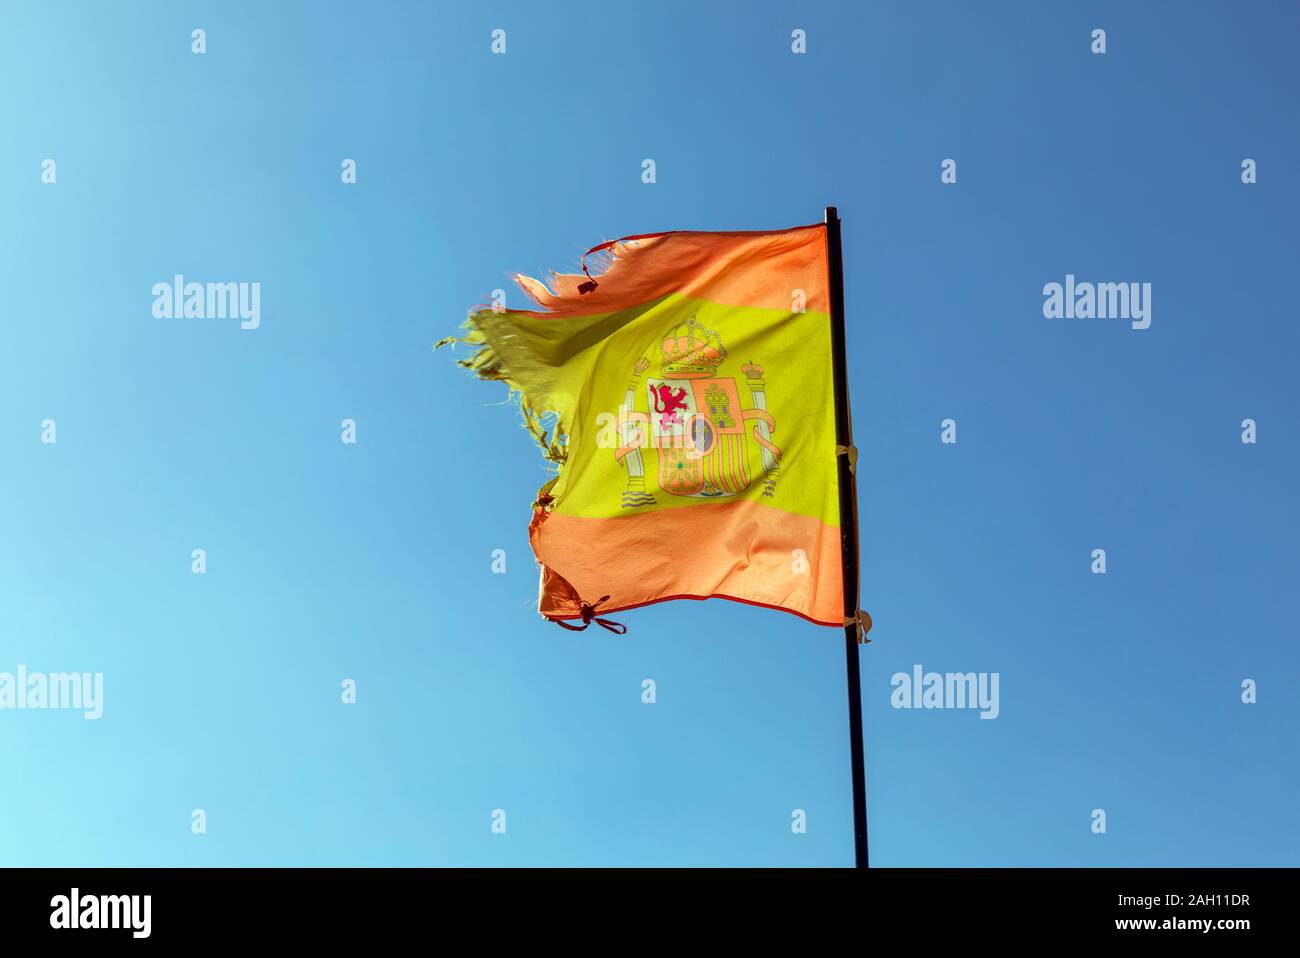 Bandera españa desgarrada fotografías e imágenes de alta resolución - Alamy